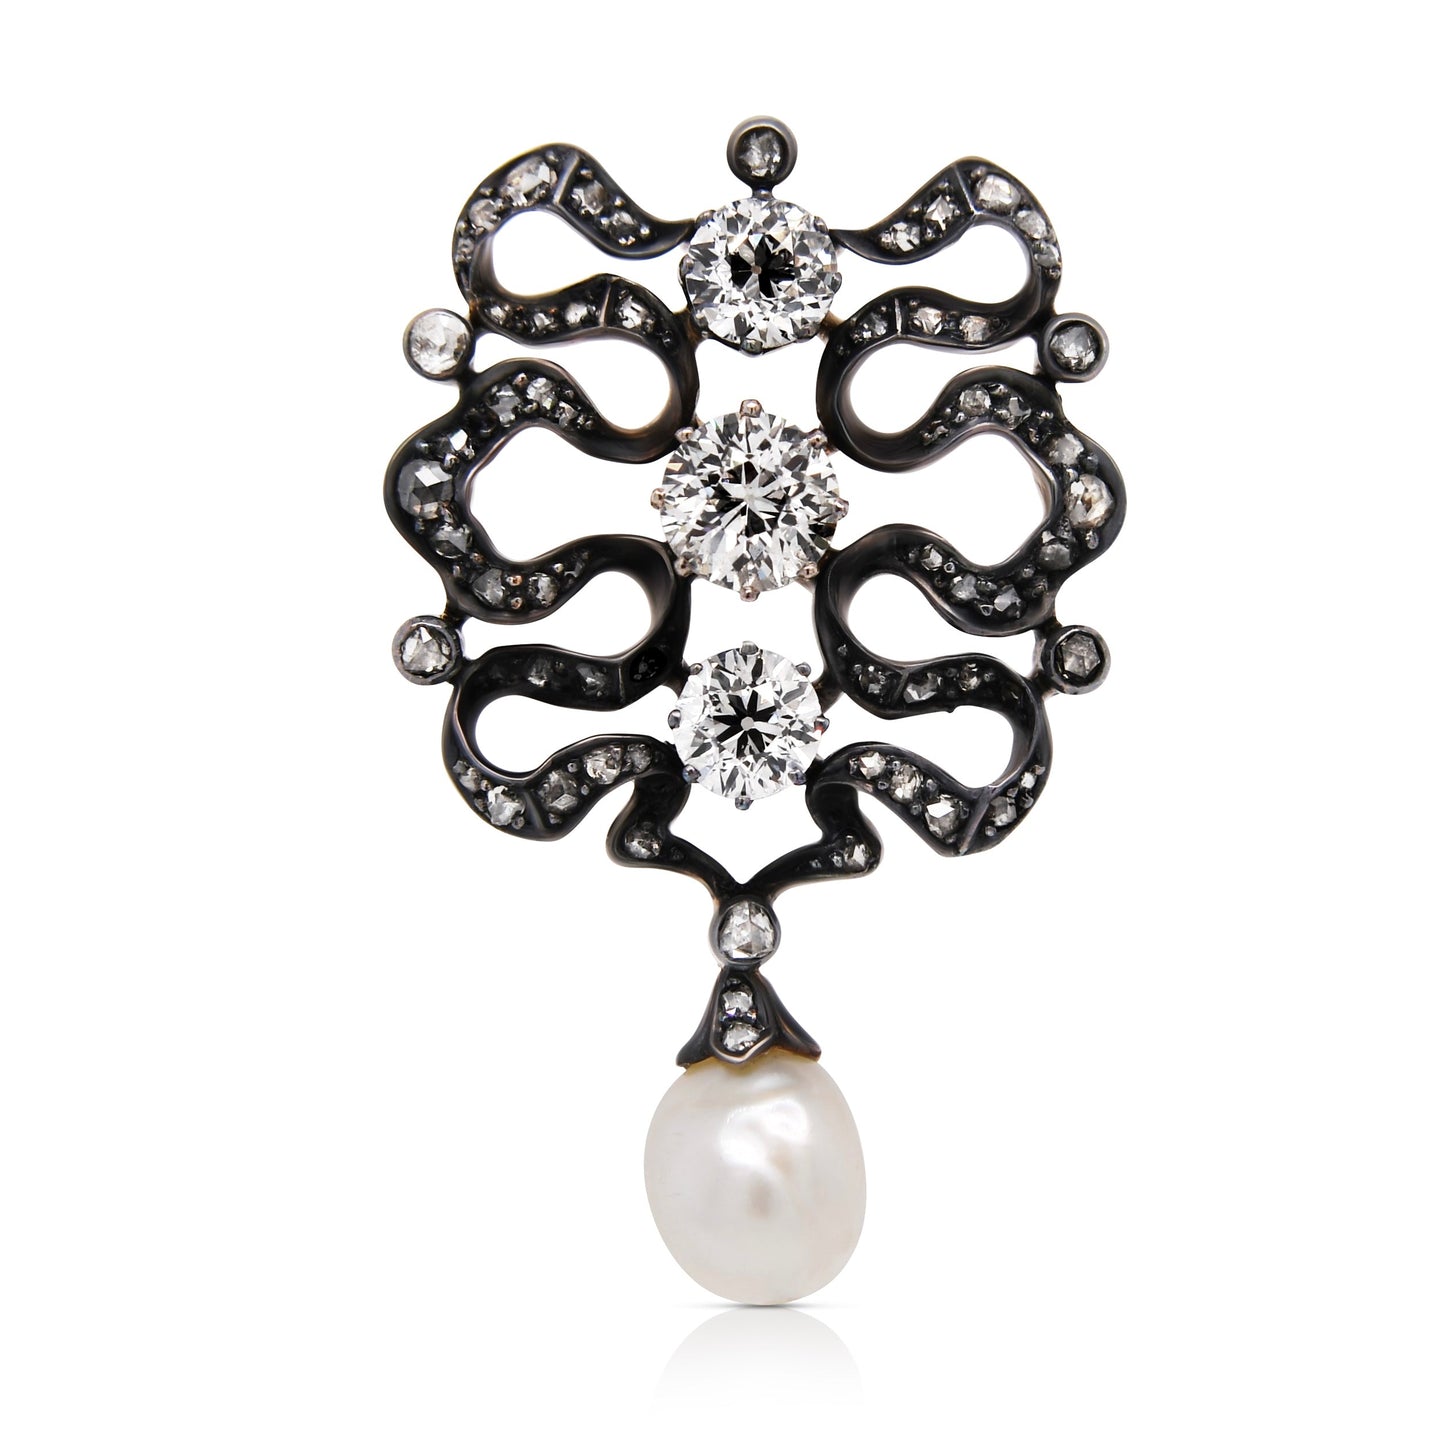 Installment 8/11 - Belle Époque old European cut diamond and pearl pendant